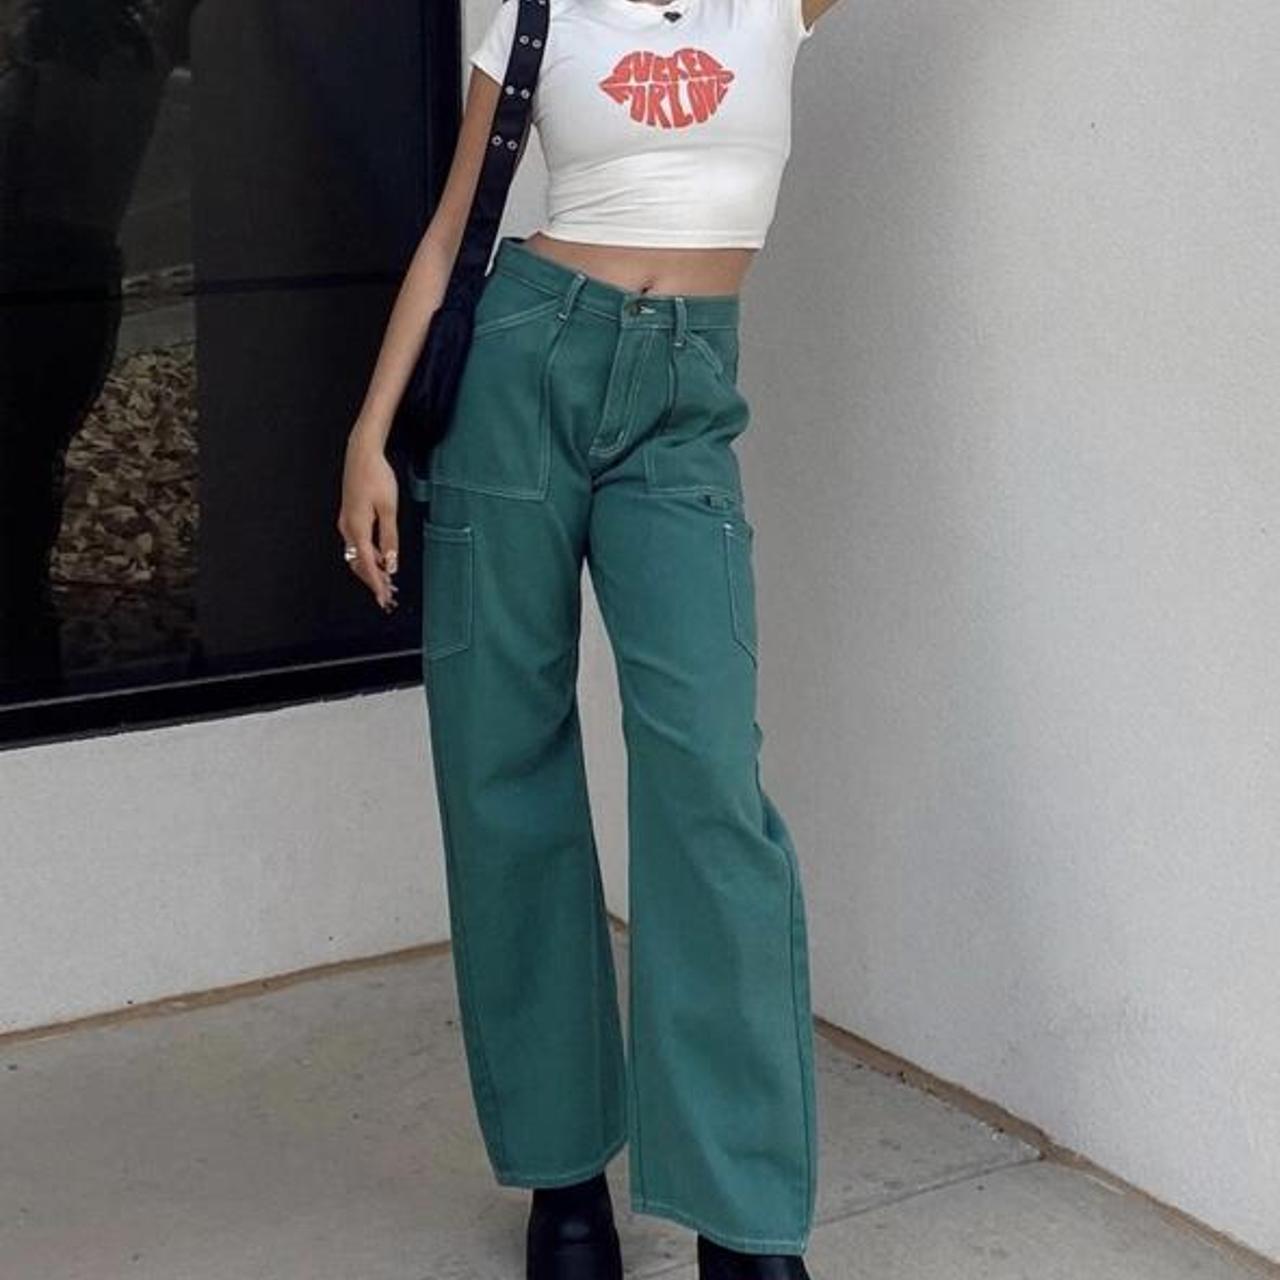 Miami Vice Pants Green